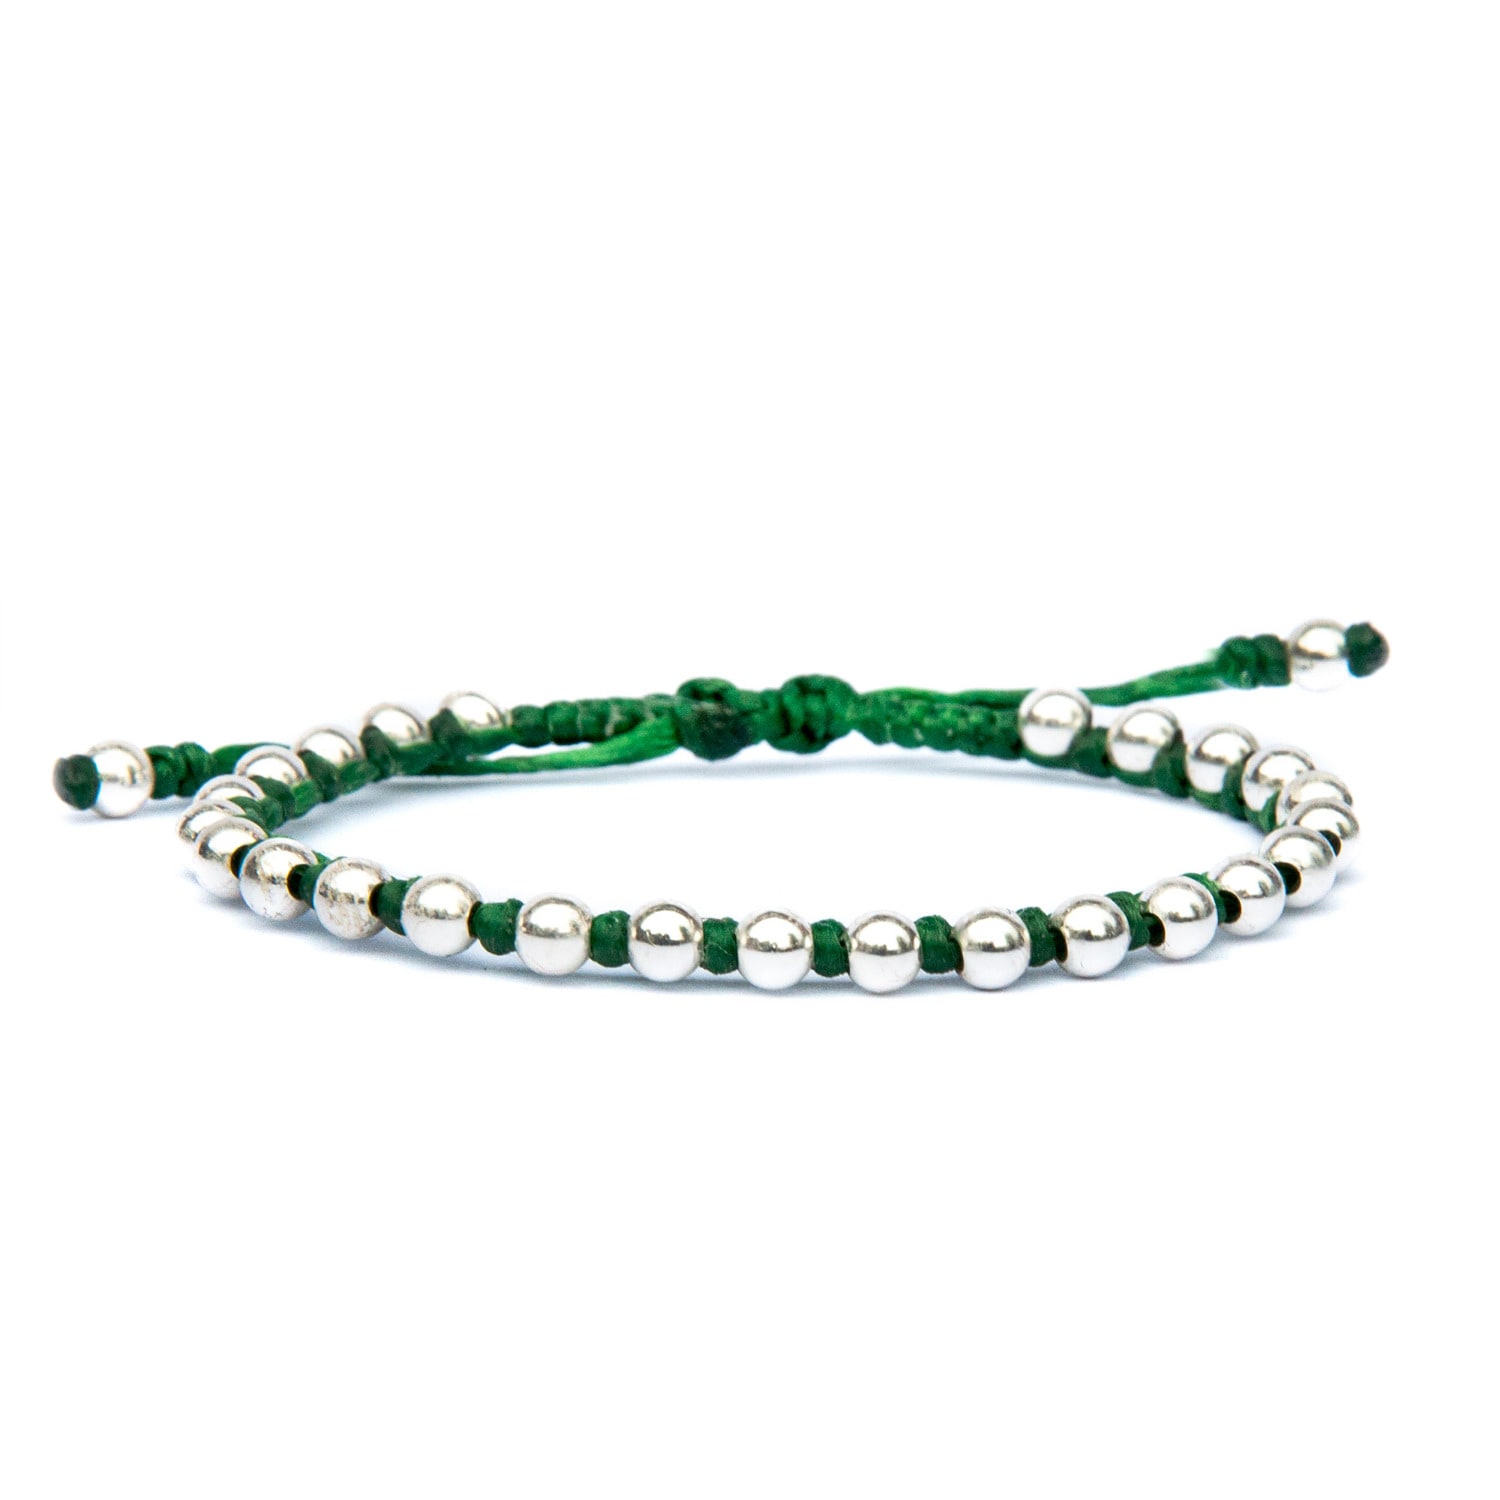 Women Delicate Green Rope Friendship Bracelet With Sterling Silver Beads - Green Harbour Uk Bracelets